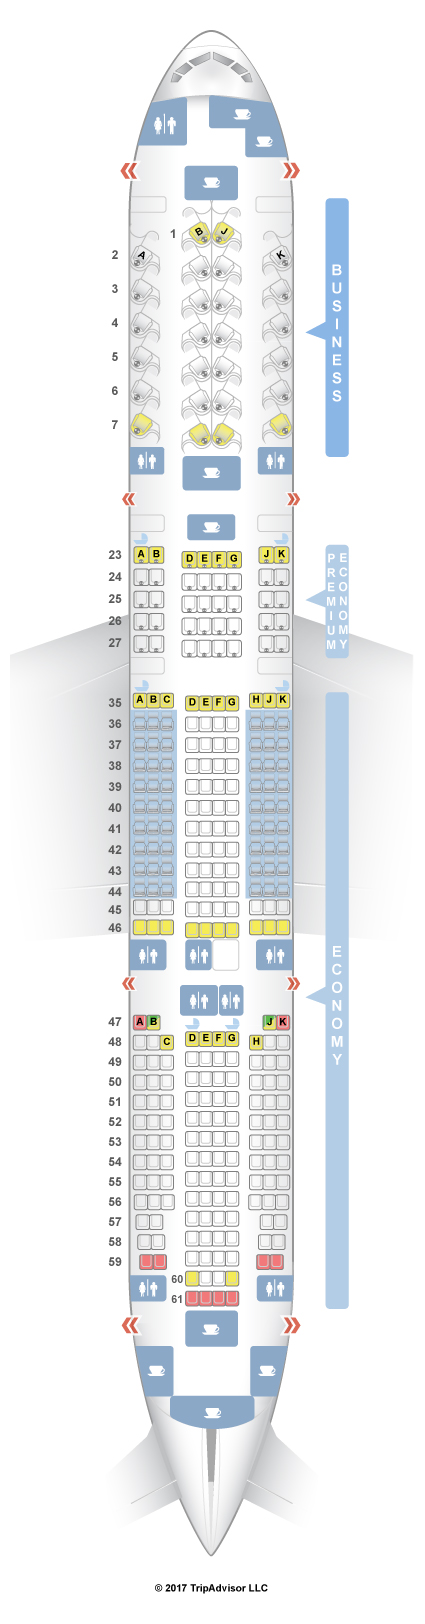 777 200er Seating Chart